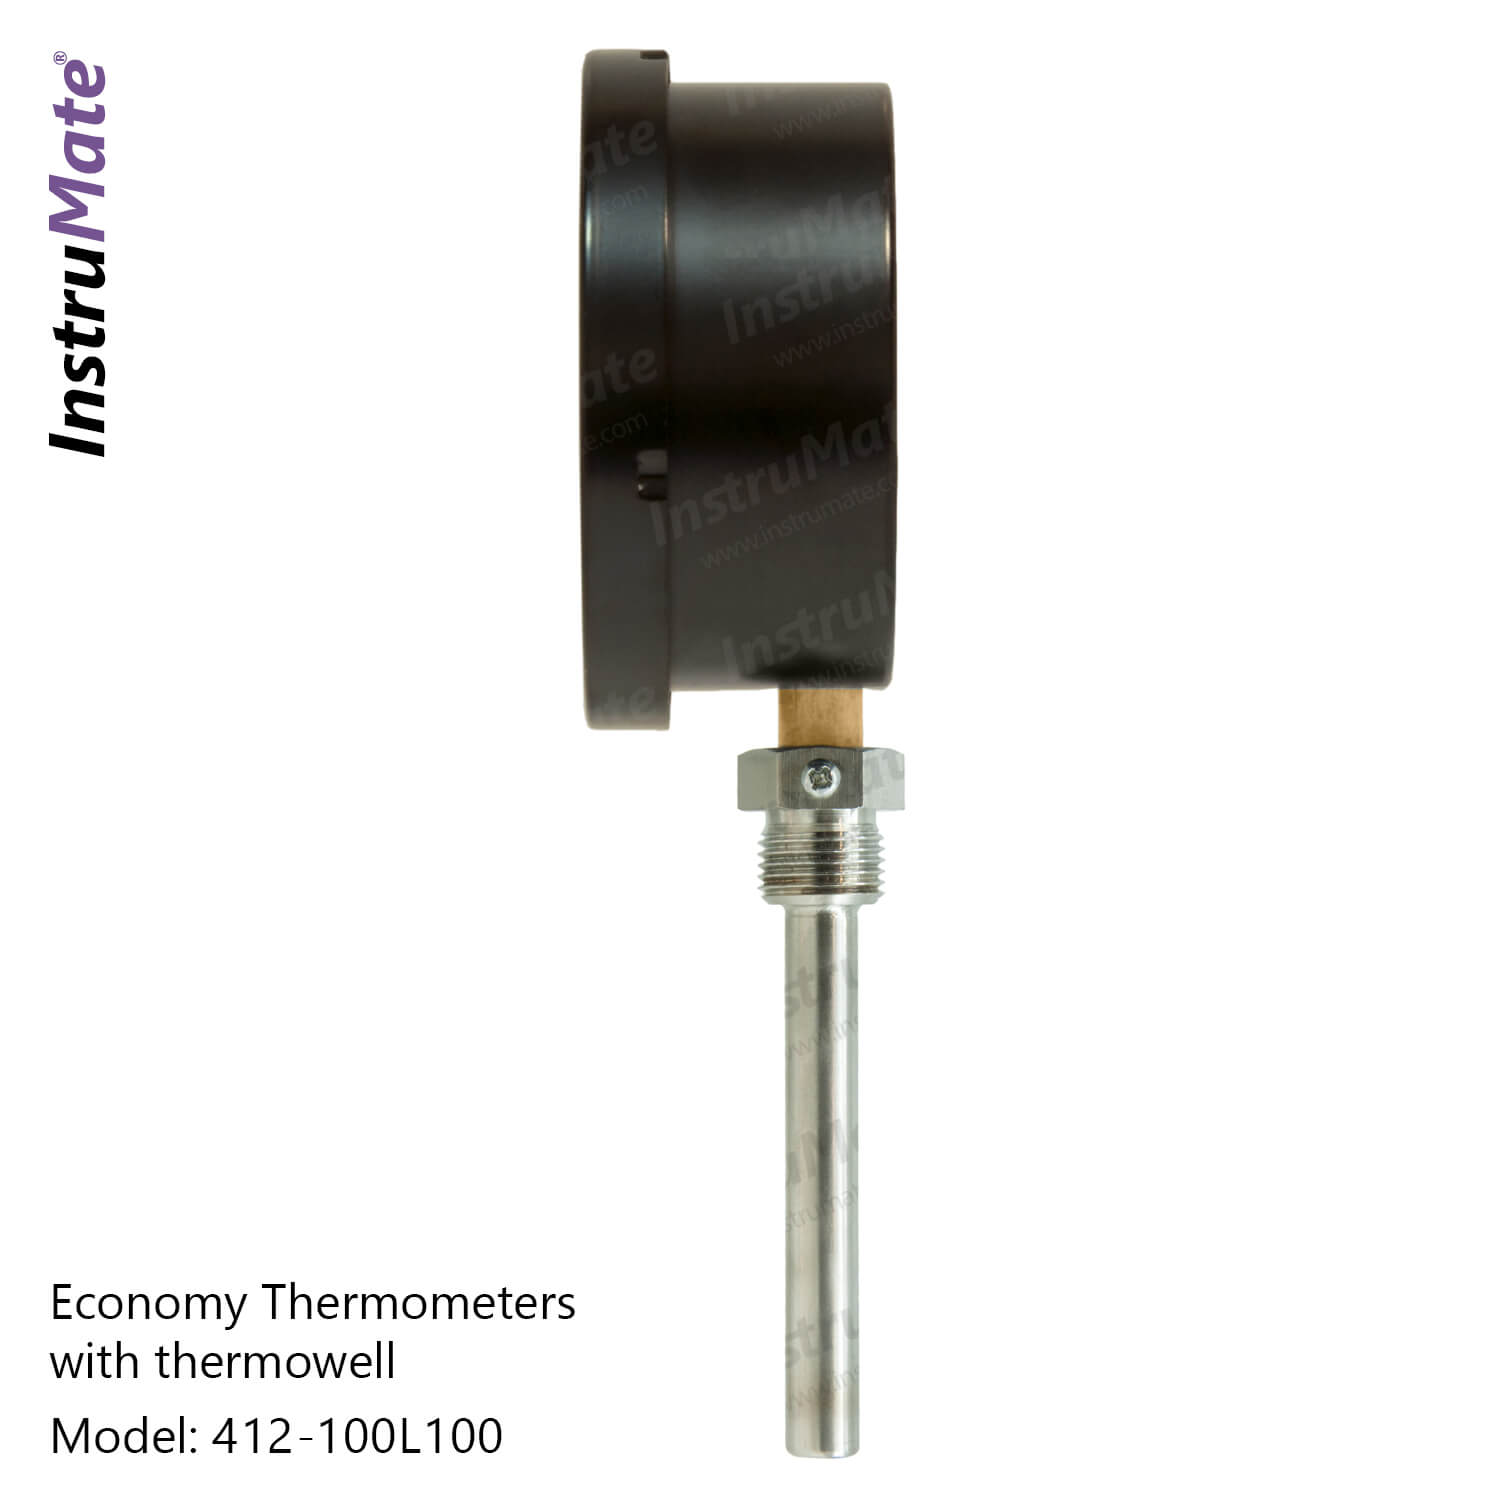 Bimetal thermometer - 412 - InstruMate